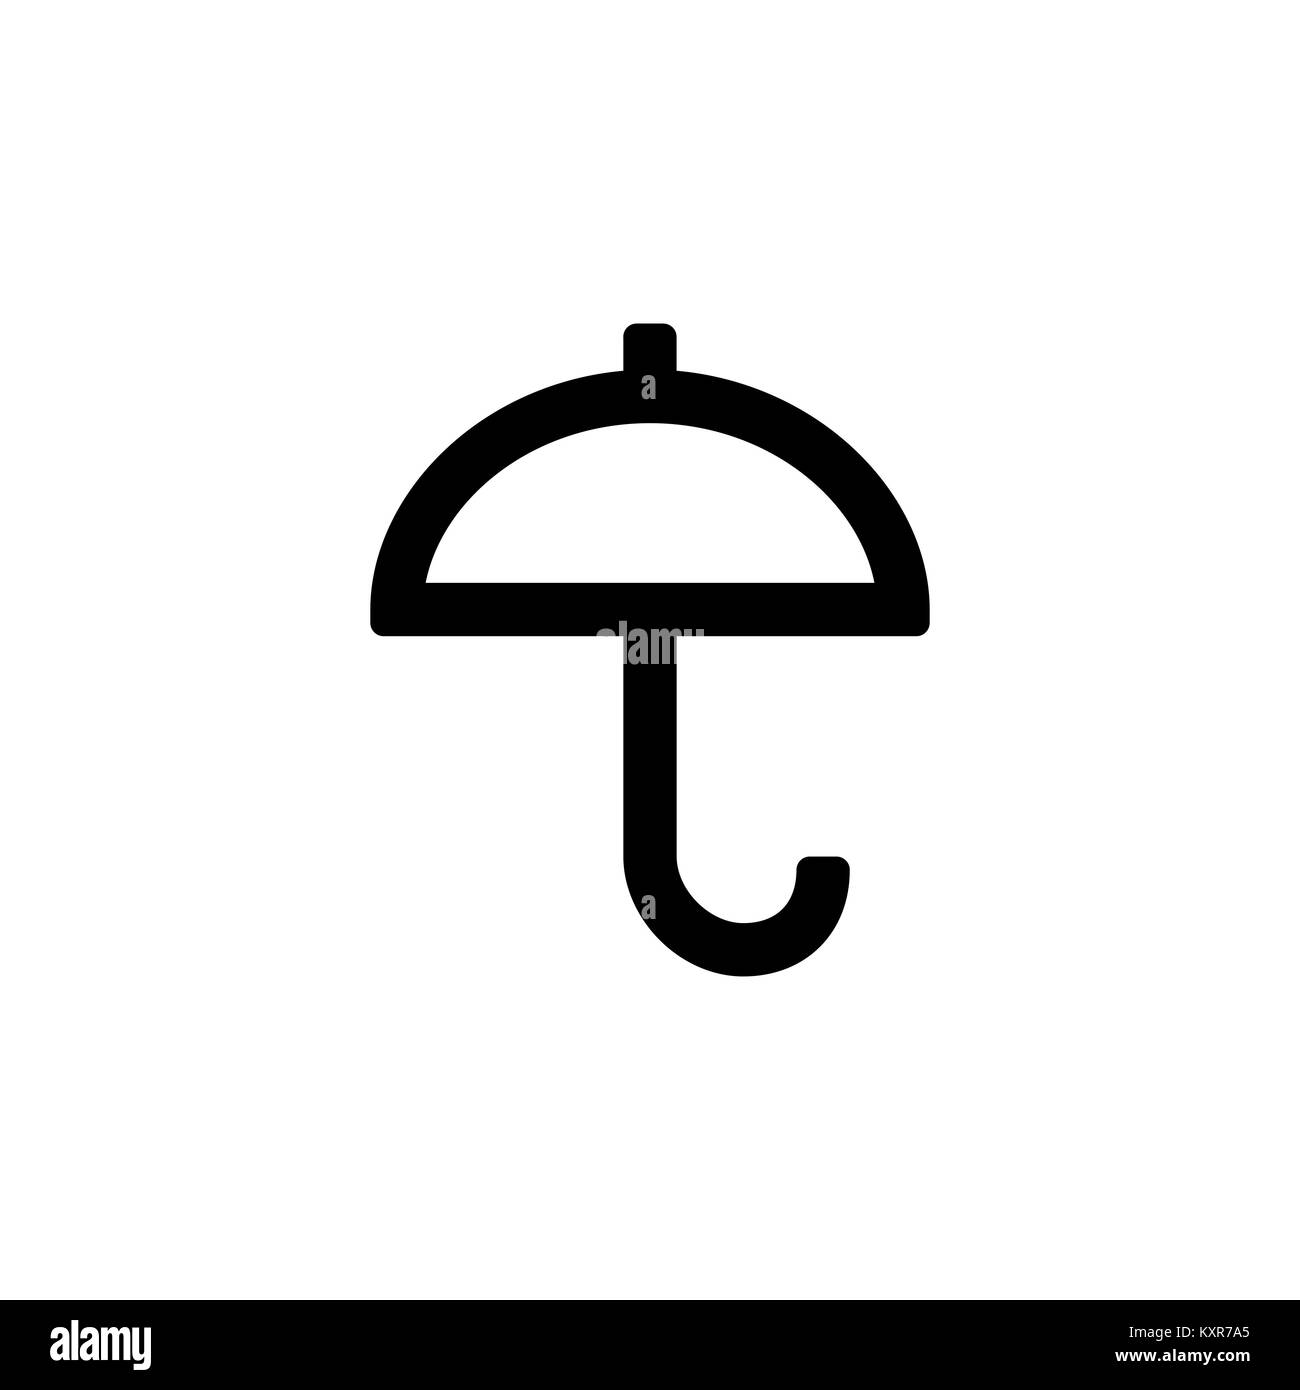 Umbrella icon for simple flat style ui design. Stock Vector